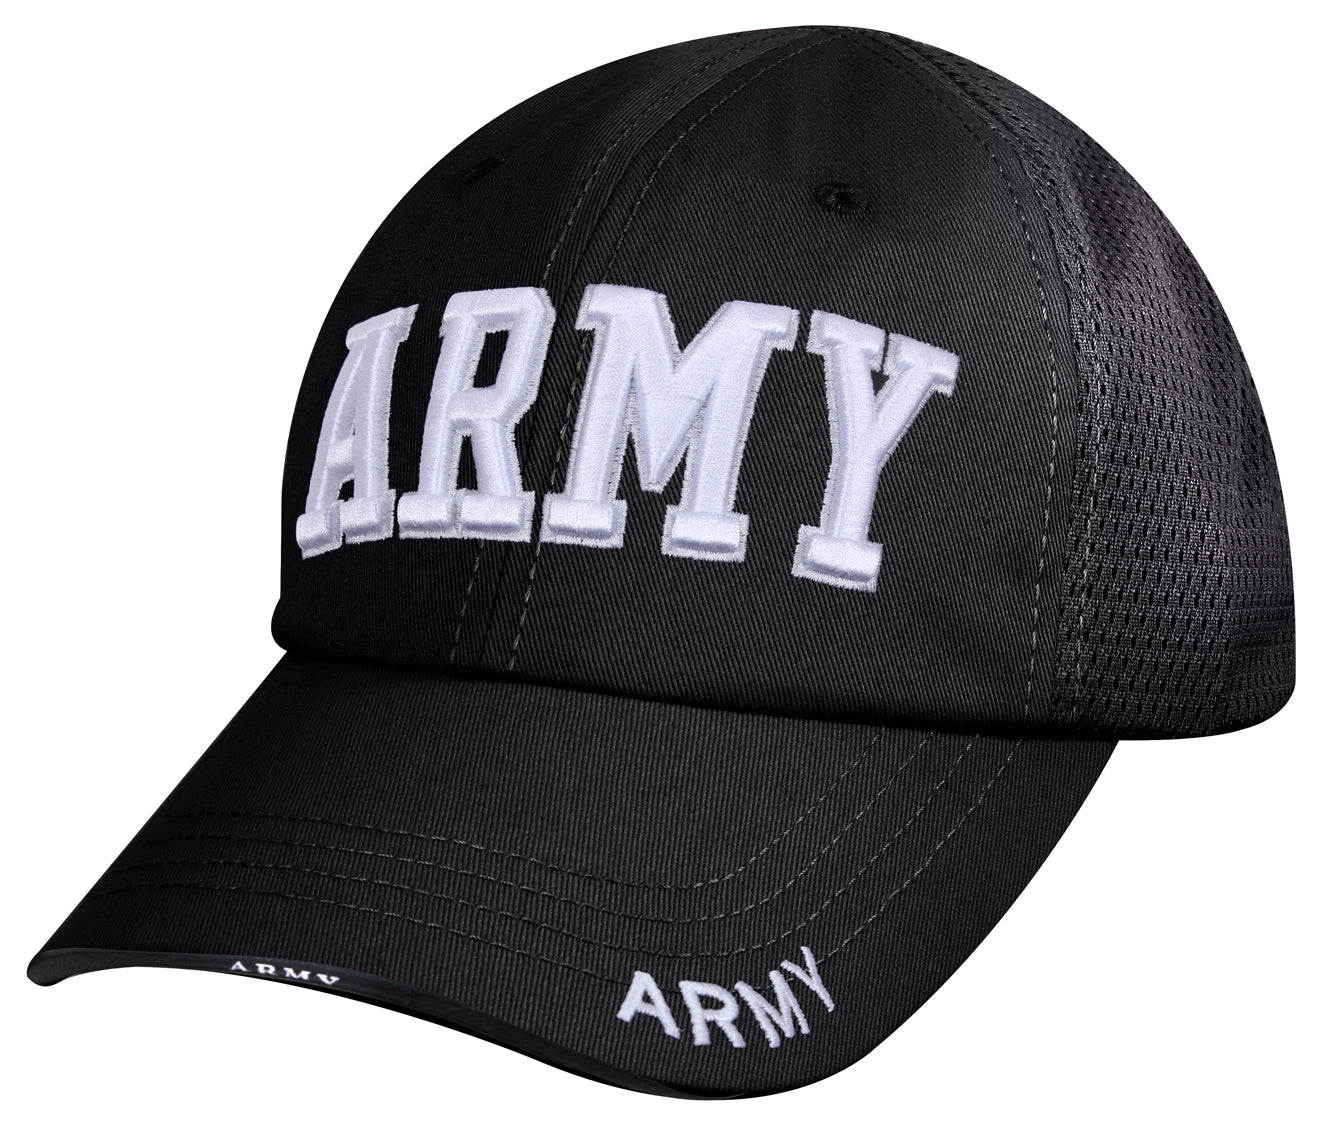 Black Mid-Low Profile Mesh Back Baseball Hat - Rothco ARMY Tactical Mesh Cap